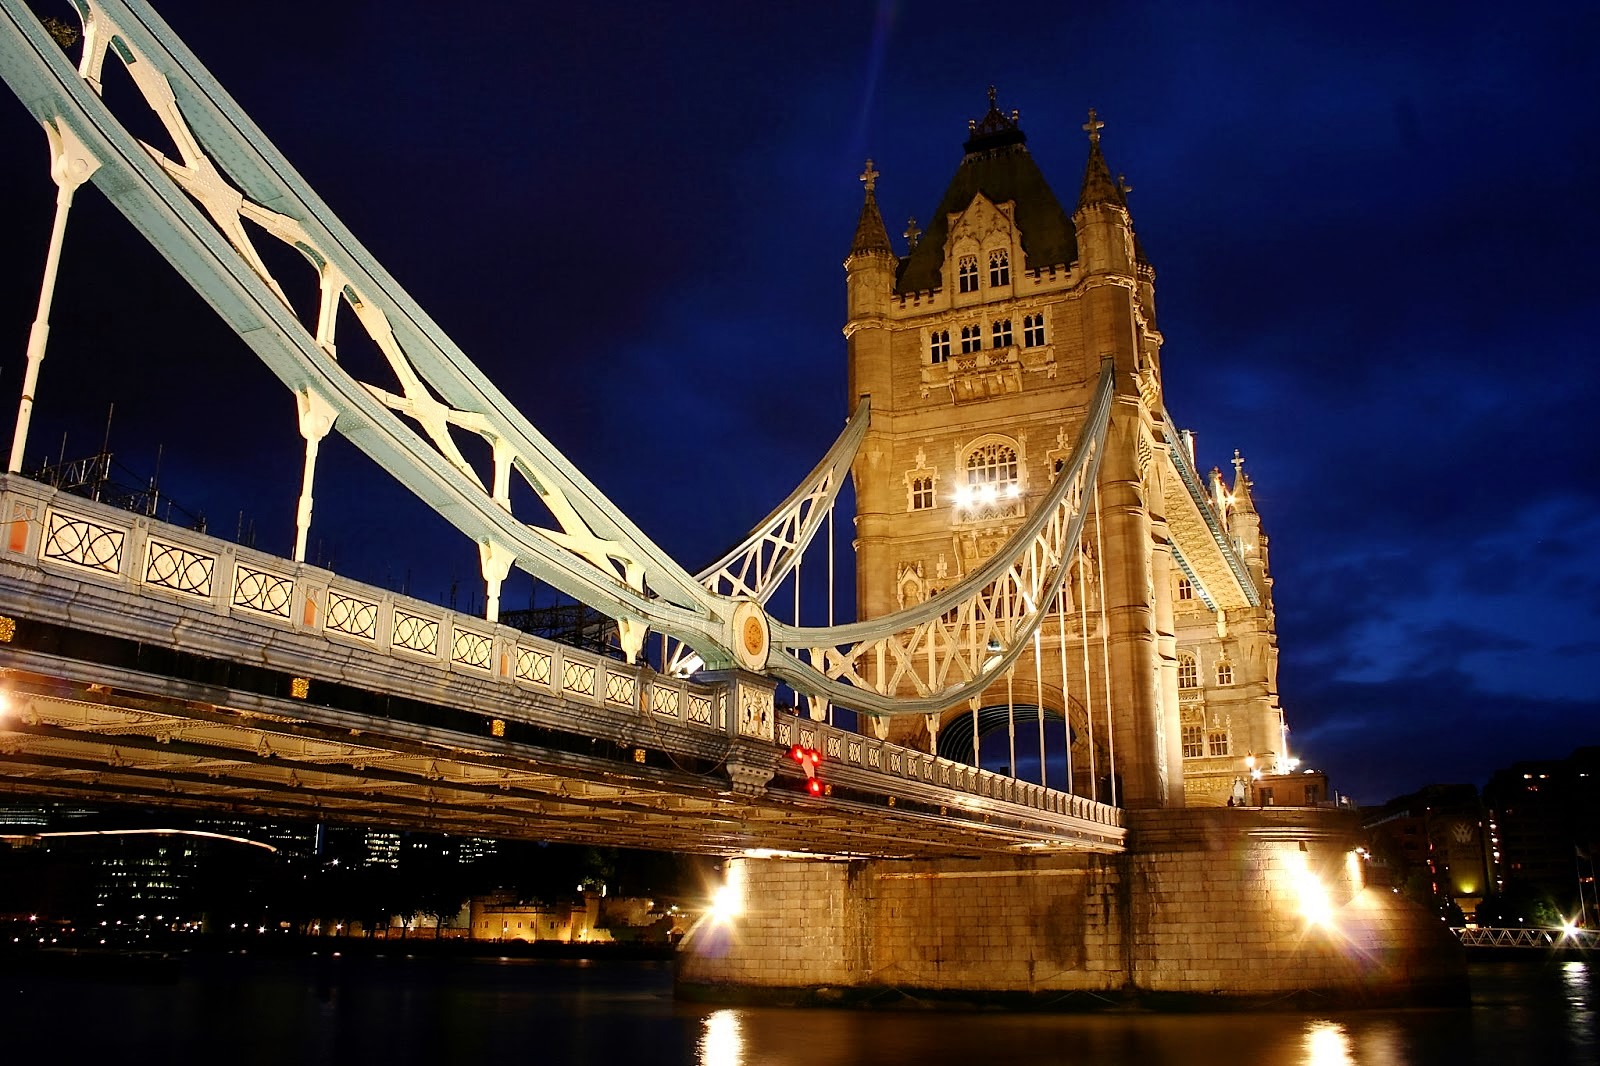 5 Five 5 Tower Bridge London England